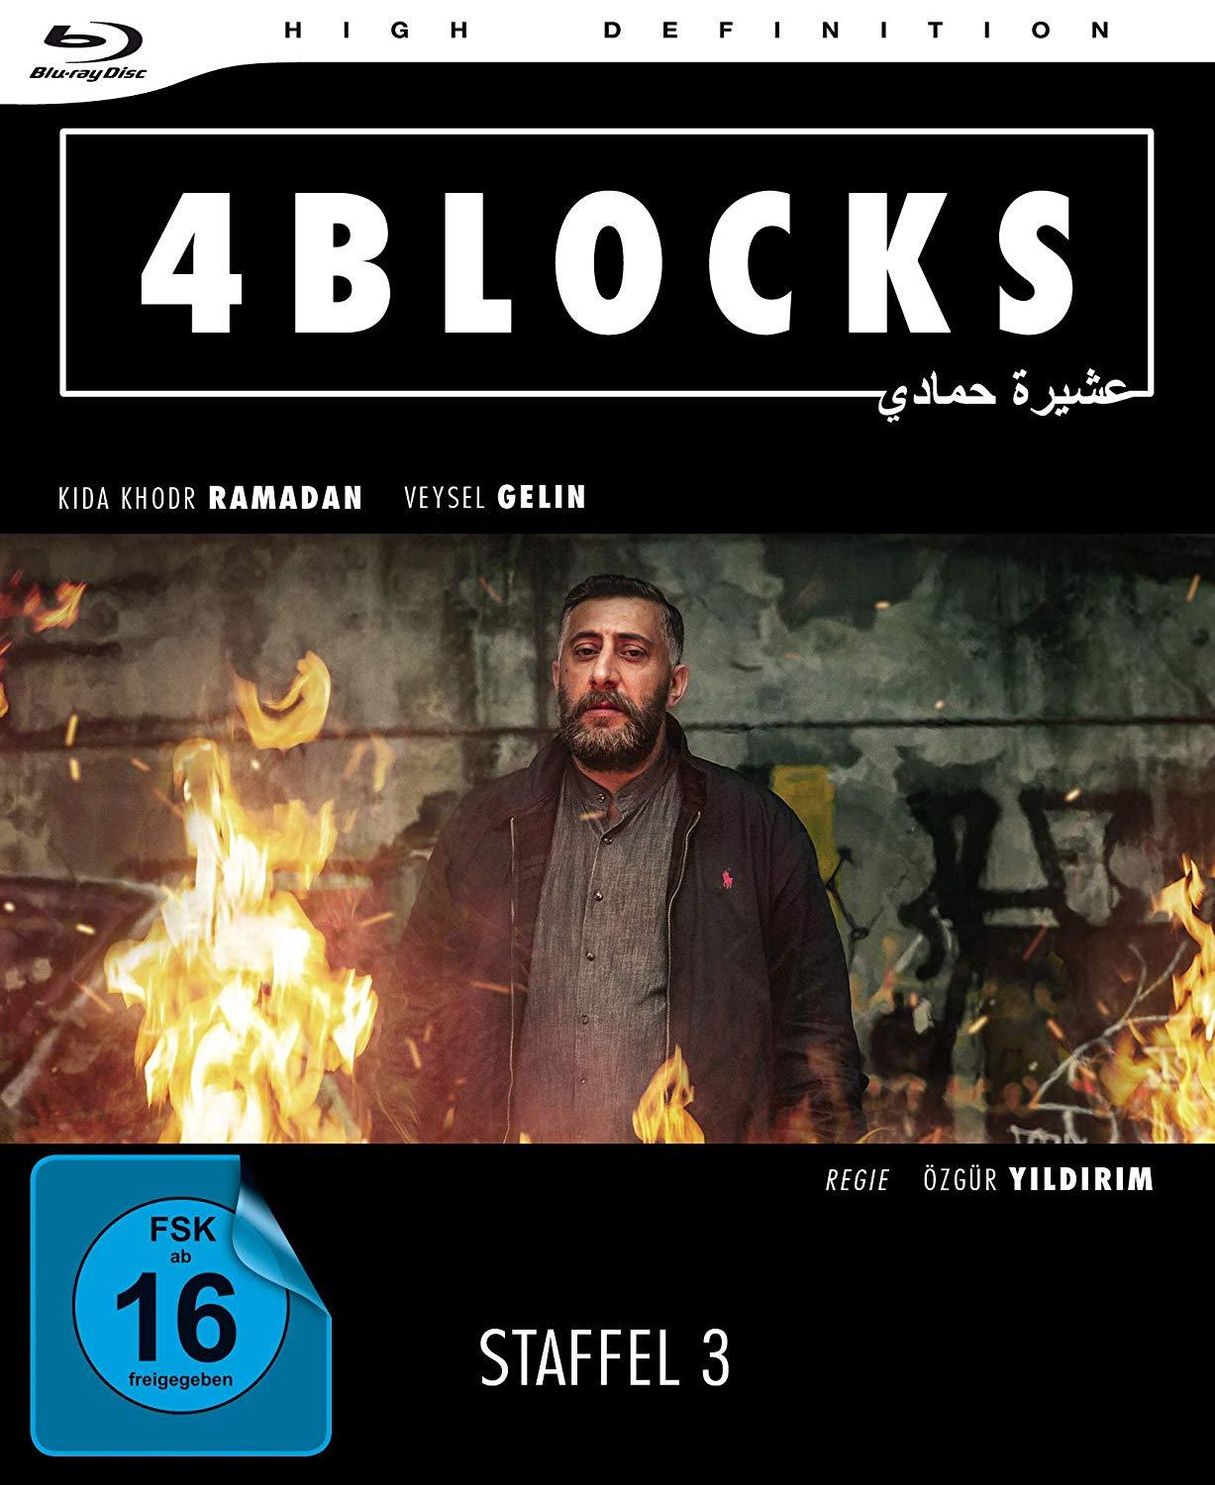 4 Blocks - Staffel 3 Blu-ray jetzt im Weltbild.de Shop bestellen